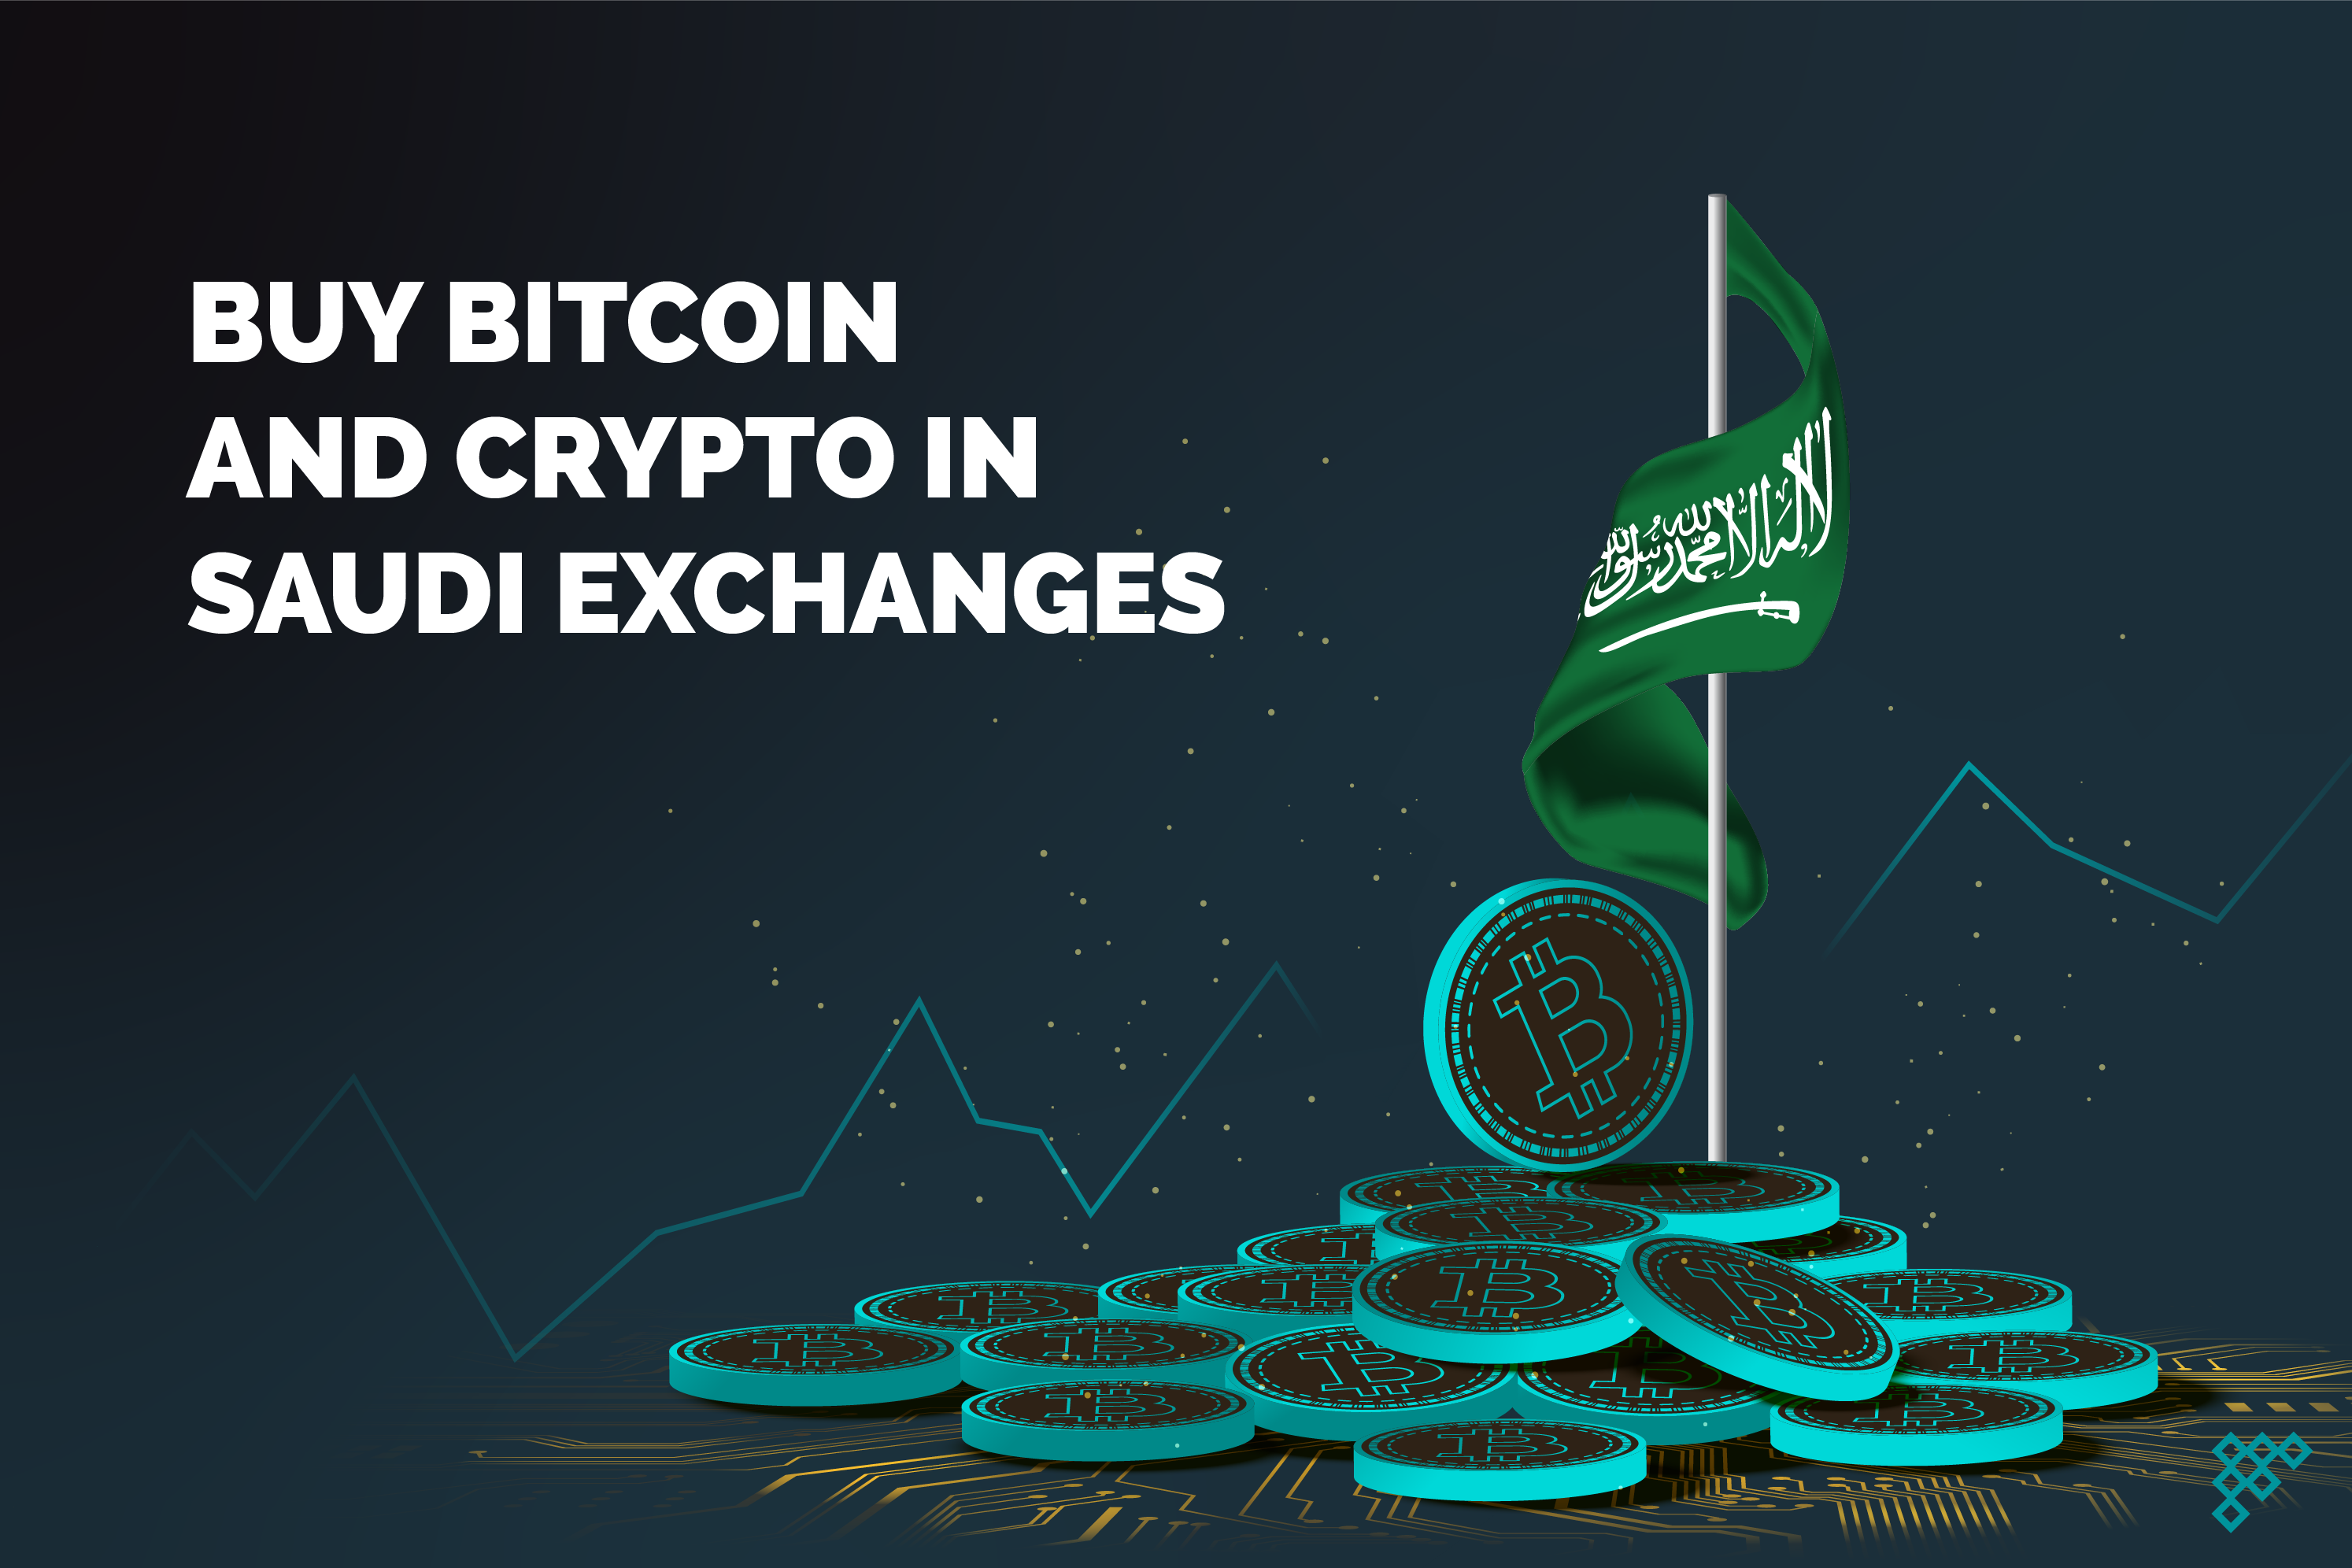 Can I buy Bitcoin with credit card in Saudi Arabia?